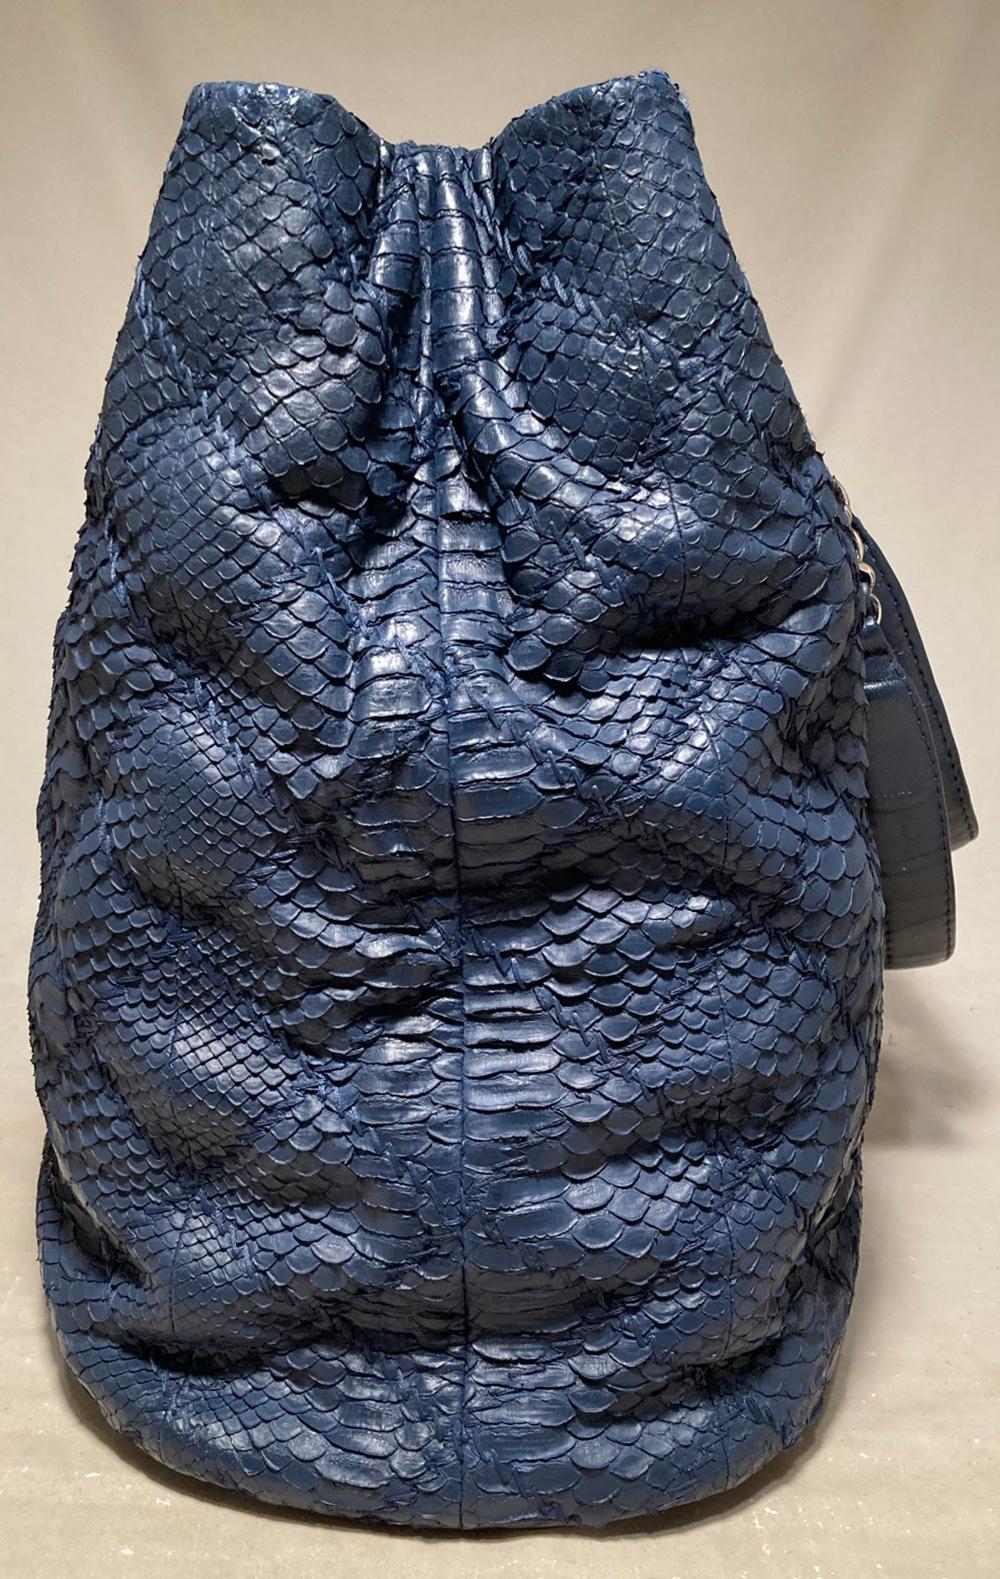 navy blue purses